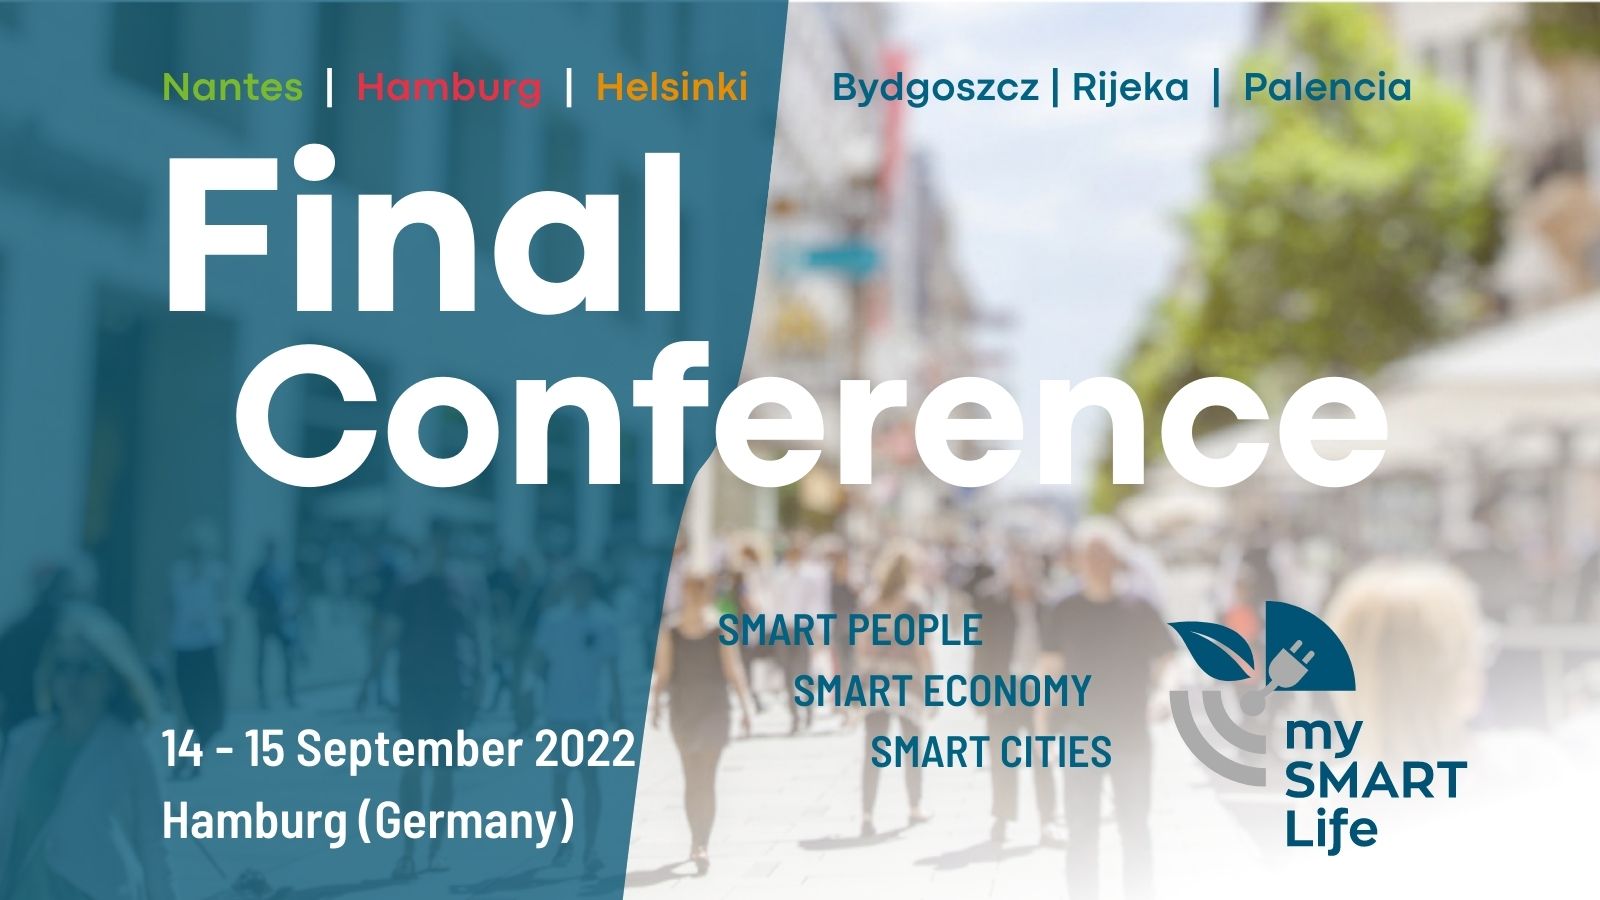 Register now! mySMARTLife Final Conference - Smart People - Smart Economy - Smart Cities